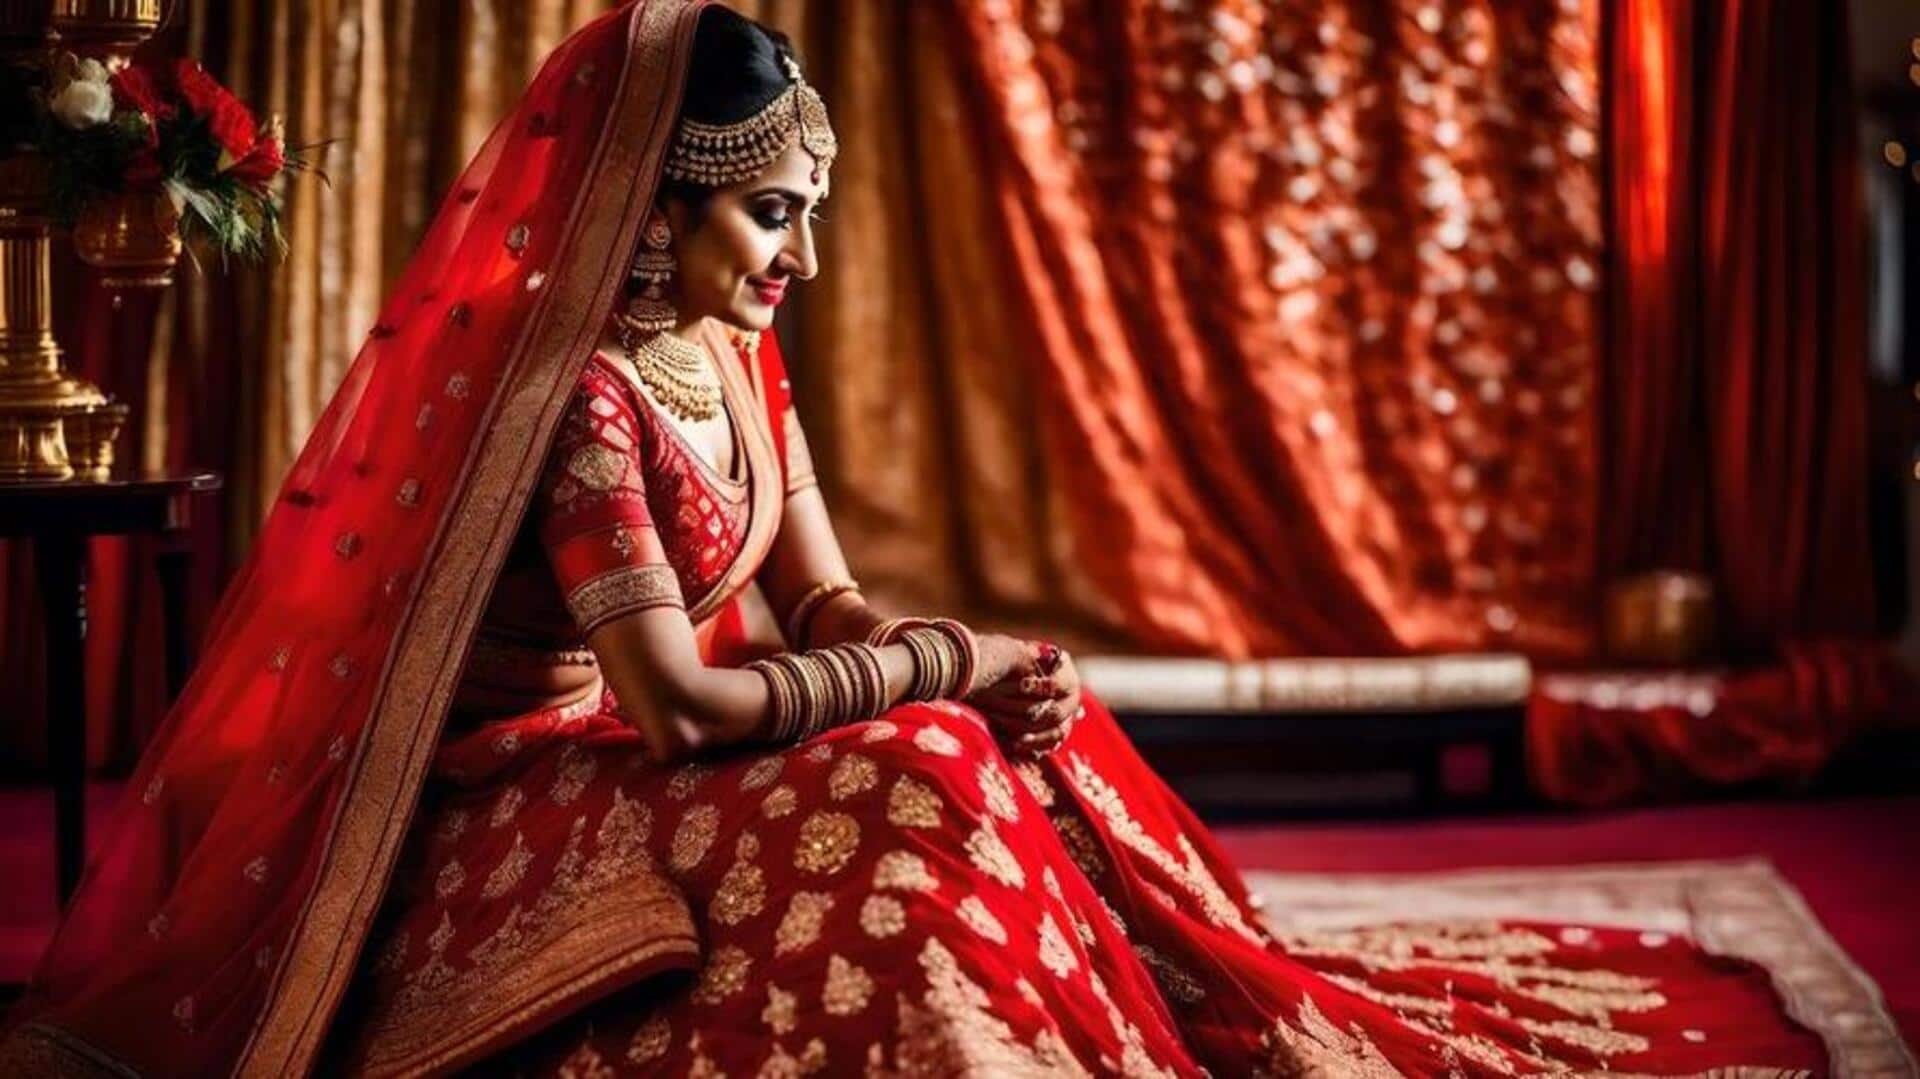 Maroon Color Wedding Indian Style Embroidered Designer Lehenga Choli for  Women Indian Bridesmaid or Bridal Wedding Dresses Outfits Skirts - Etsy